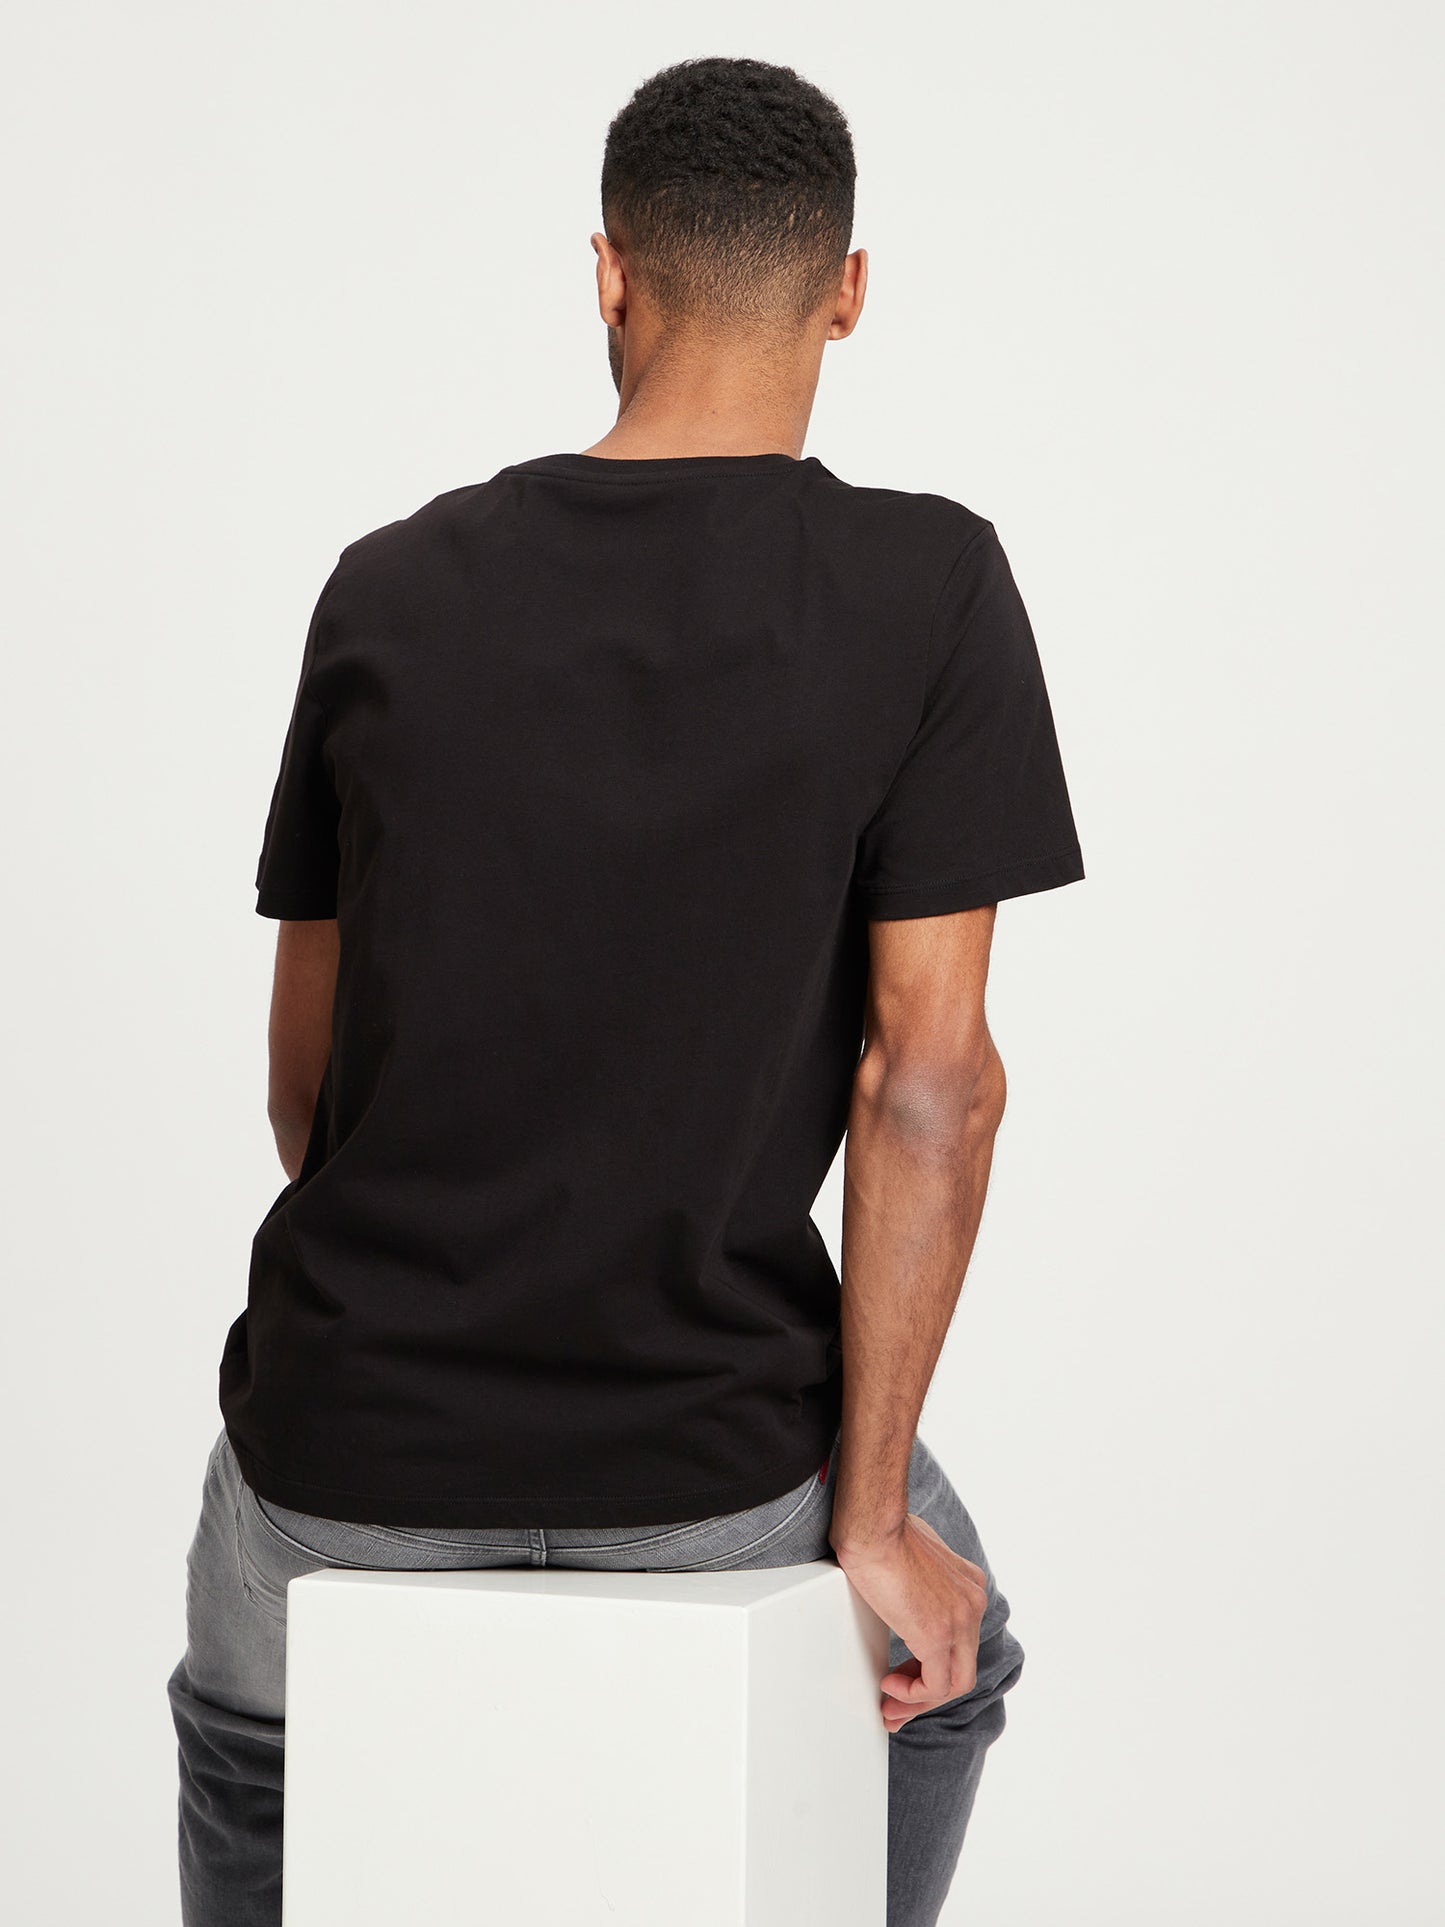 Herren Regular T-Shirt mit Front-Print schwarz.